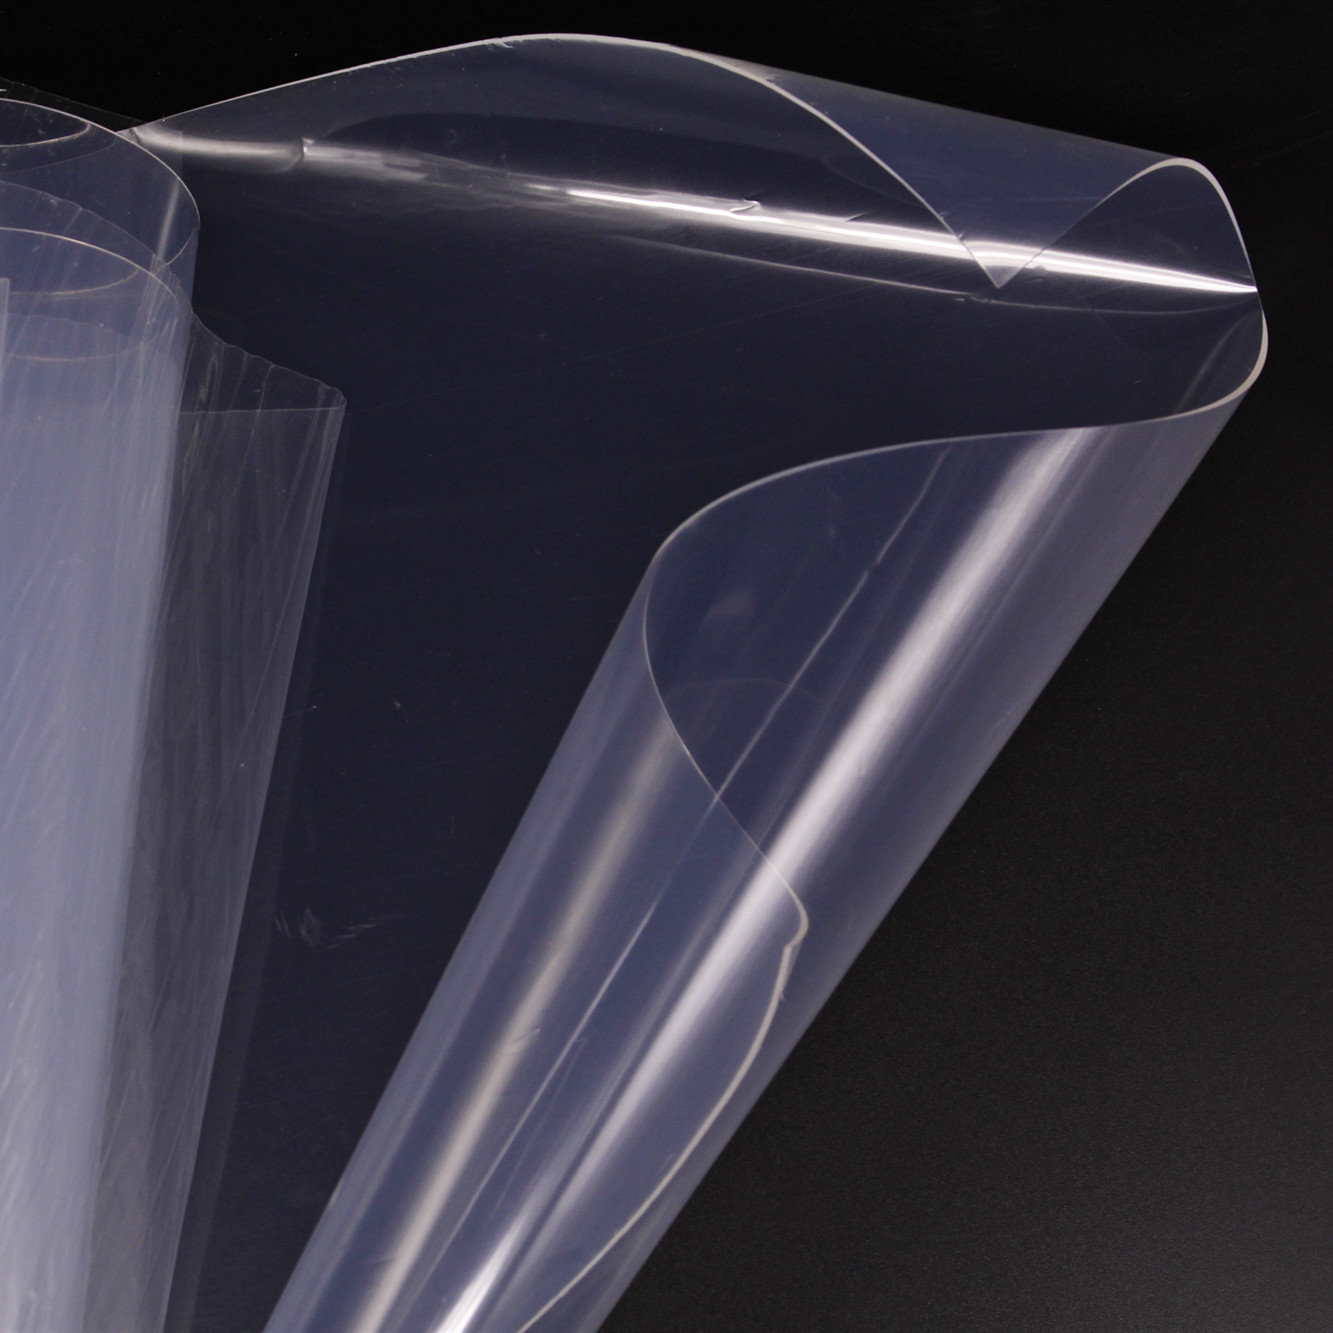 Wholesale Translucent Clear Silicon Rubber Membrane For Vacuum Press